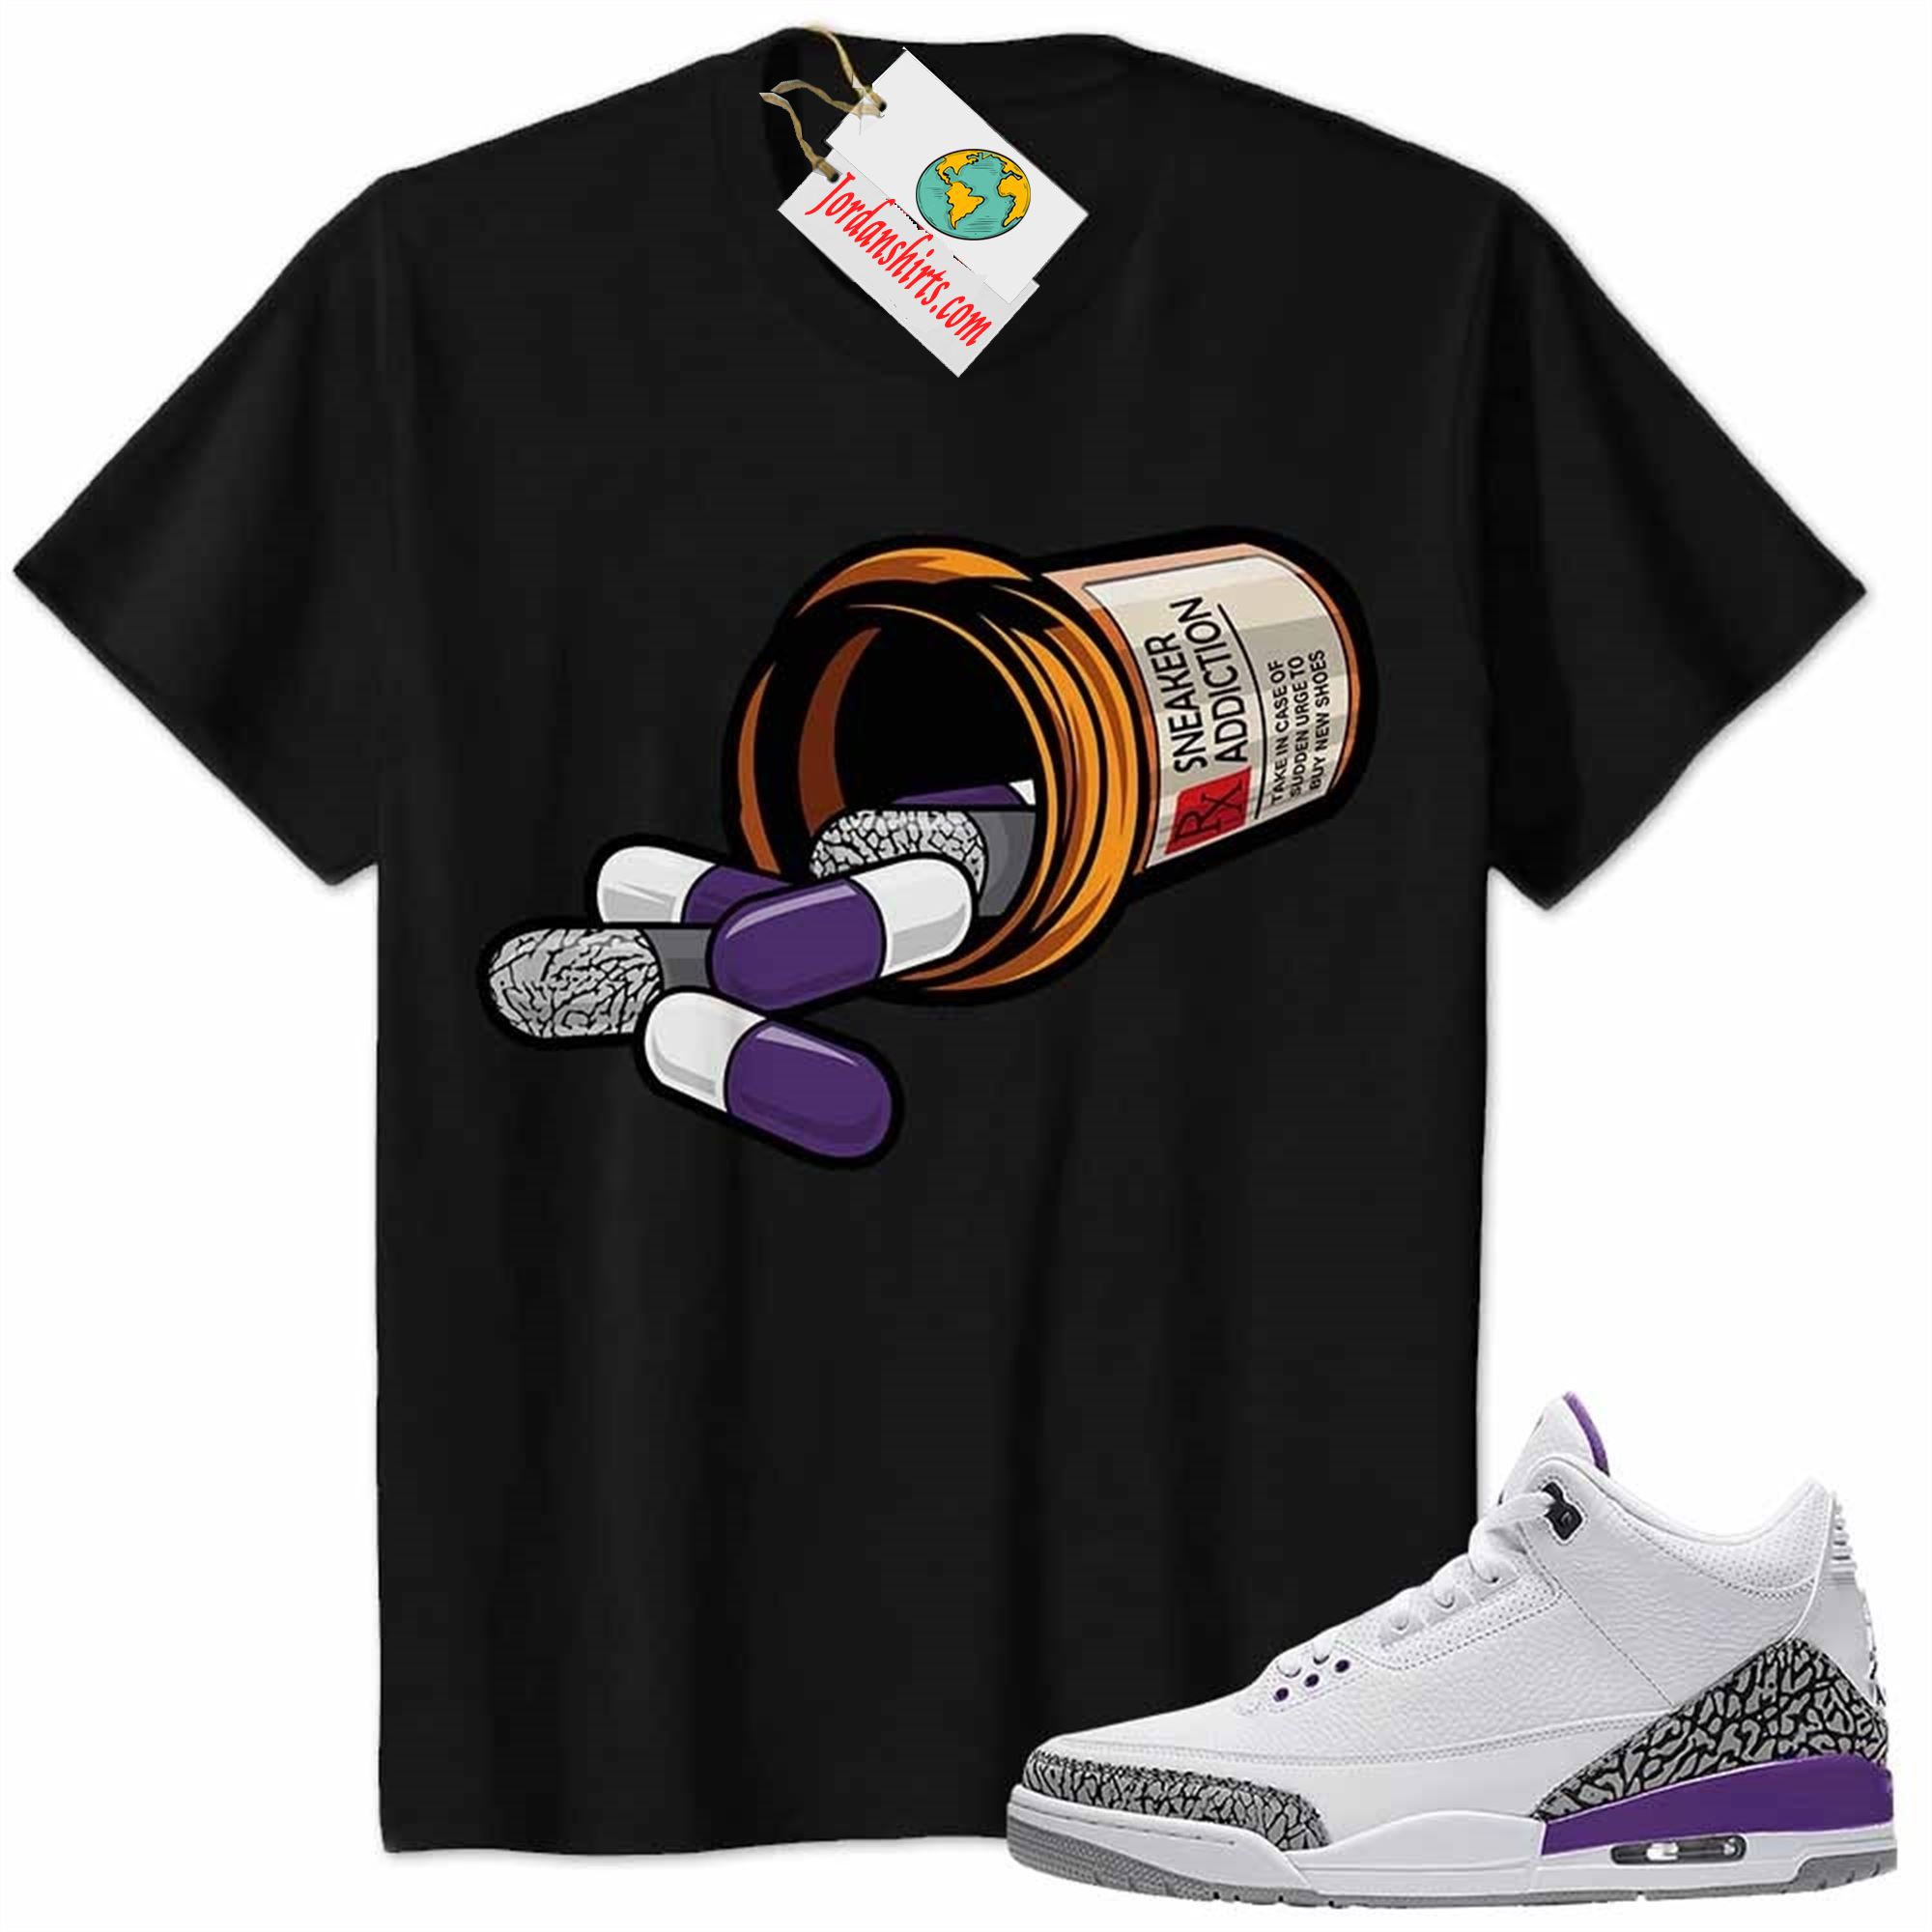 Jordan 3 Shirt, Rx Drugs Pill Bottle Sneaker Addiction Black Air Jordan 3 Wmns Dark Iris Violet Ore 3s Plus Size Up To 5xl